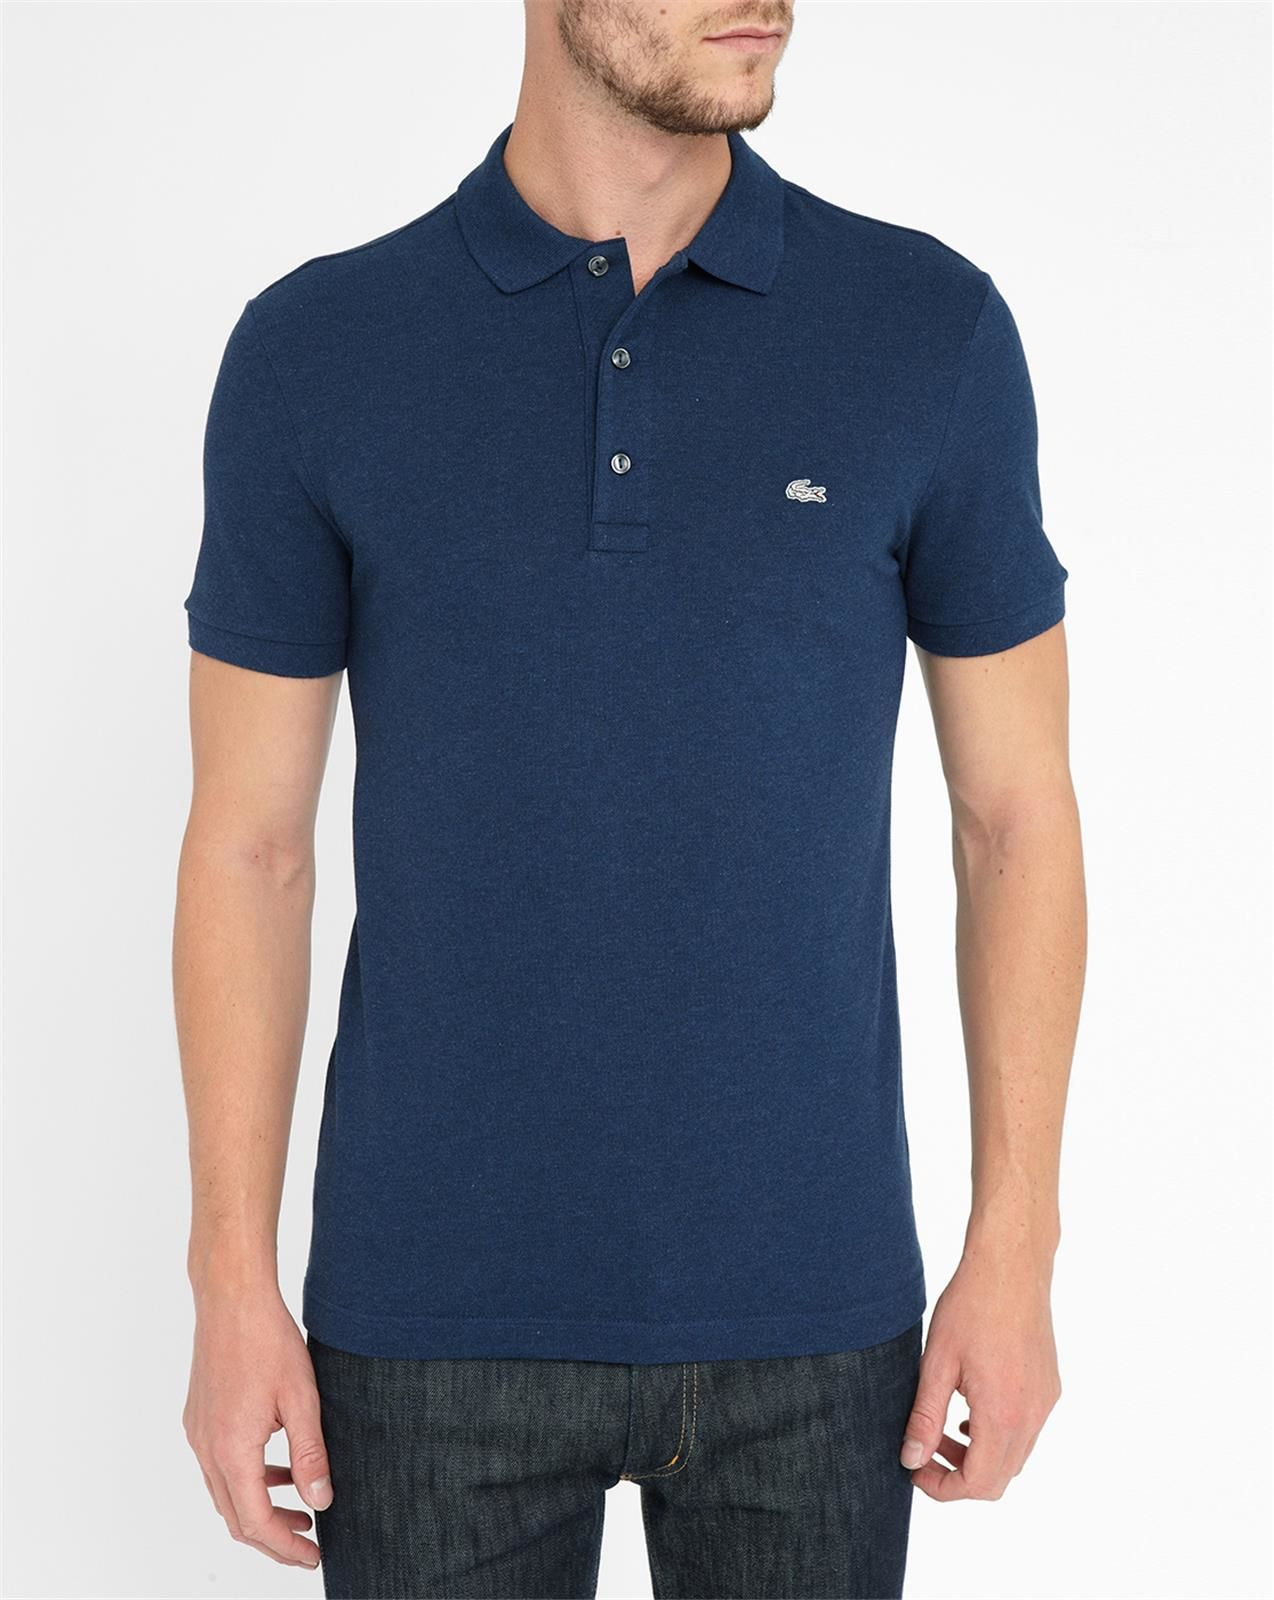 Lacoste Marled Blue Logo Shortsleeve Slimfit Polo Shirt in Blue for 